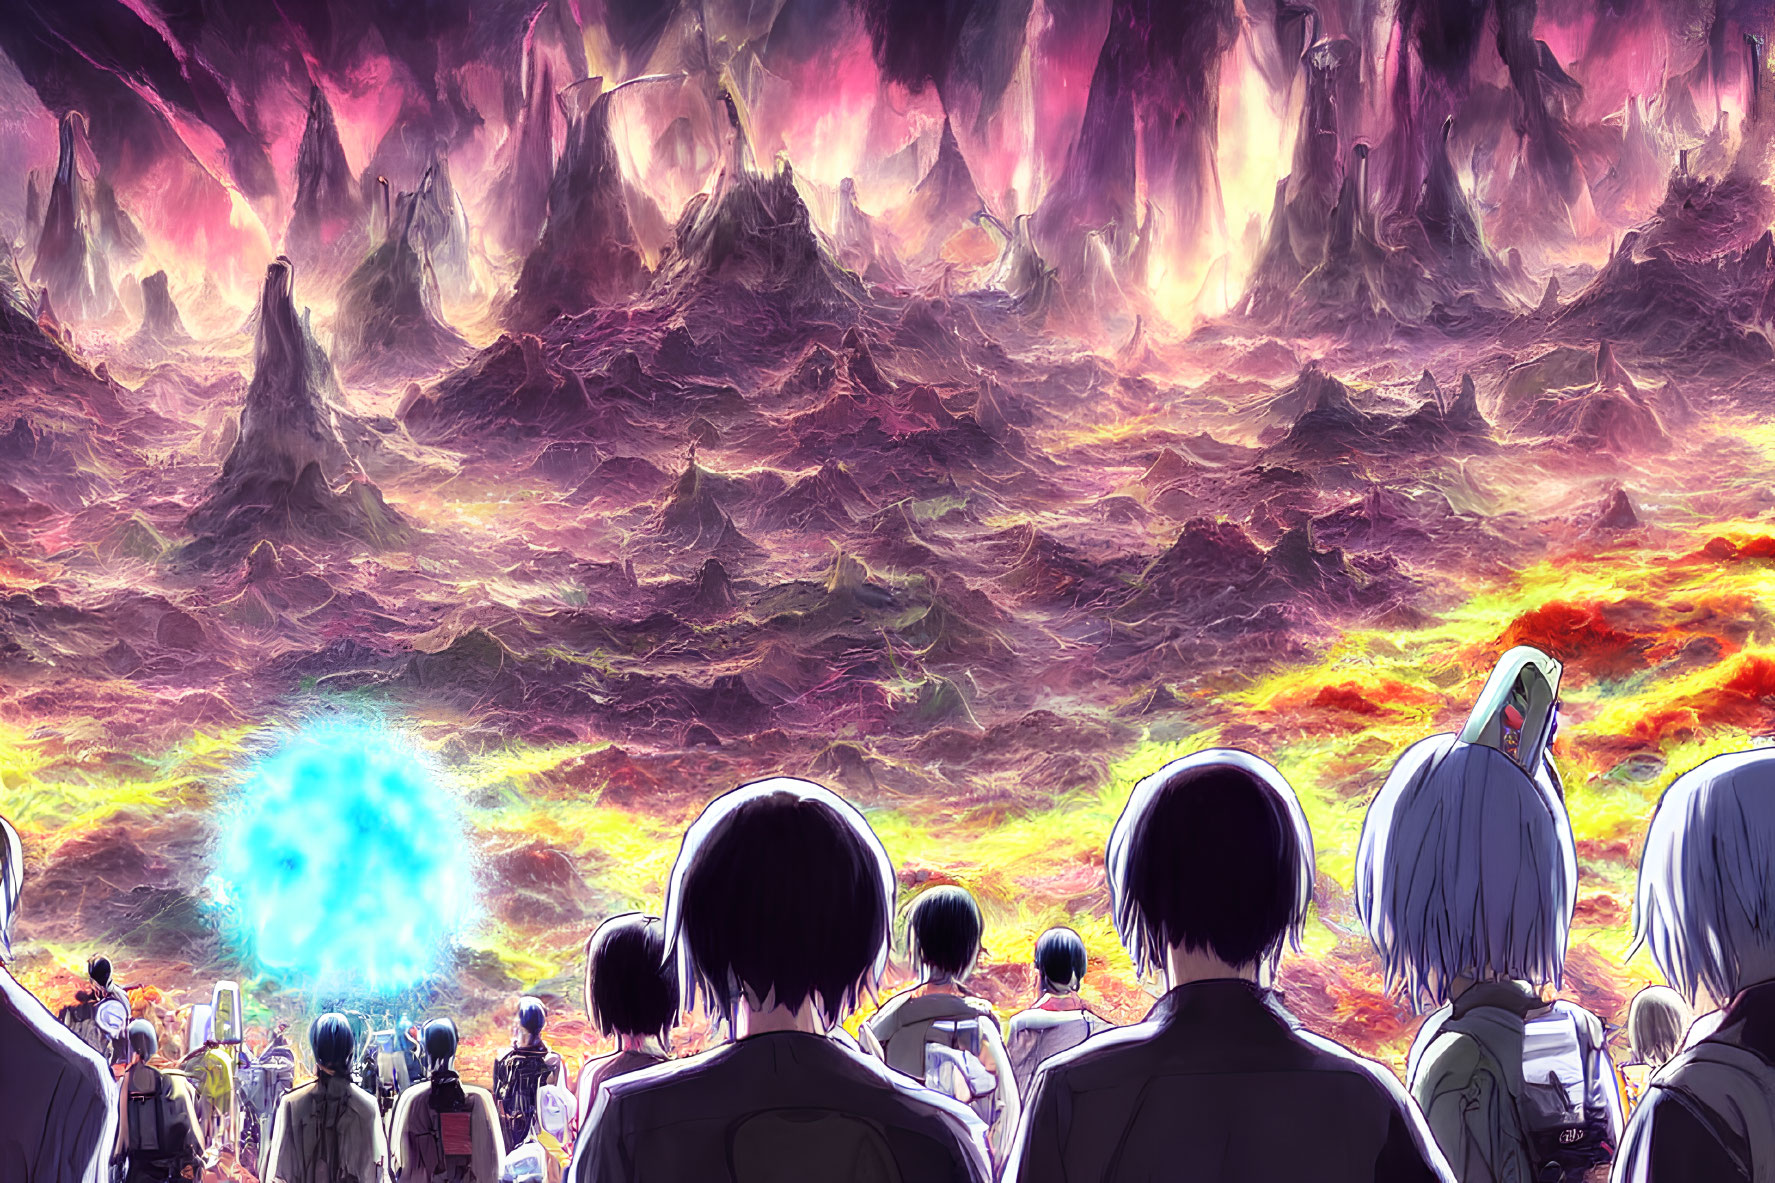 Group of people observe glowing blue orb in fiery, apocalyptic landscape